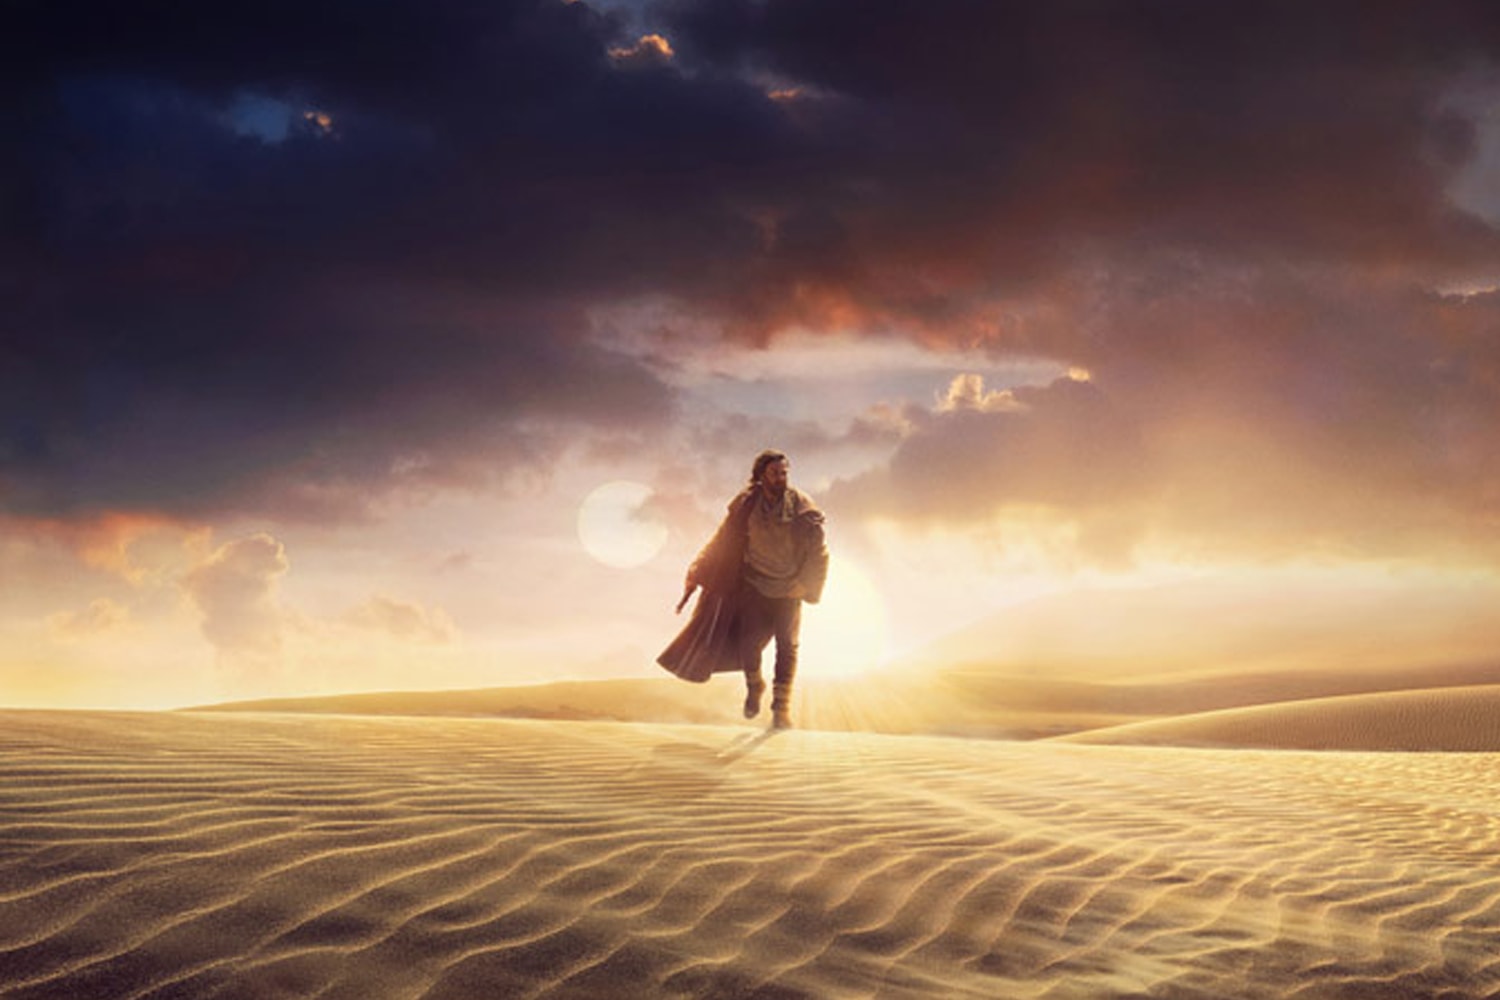 《Star Wars》最新外傳影集《Obi-Wan Kenobi》首張電影海報及上線日期率先公開